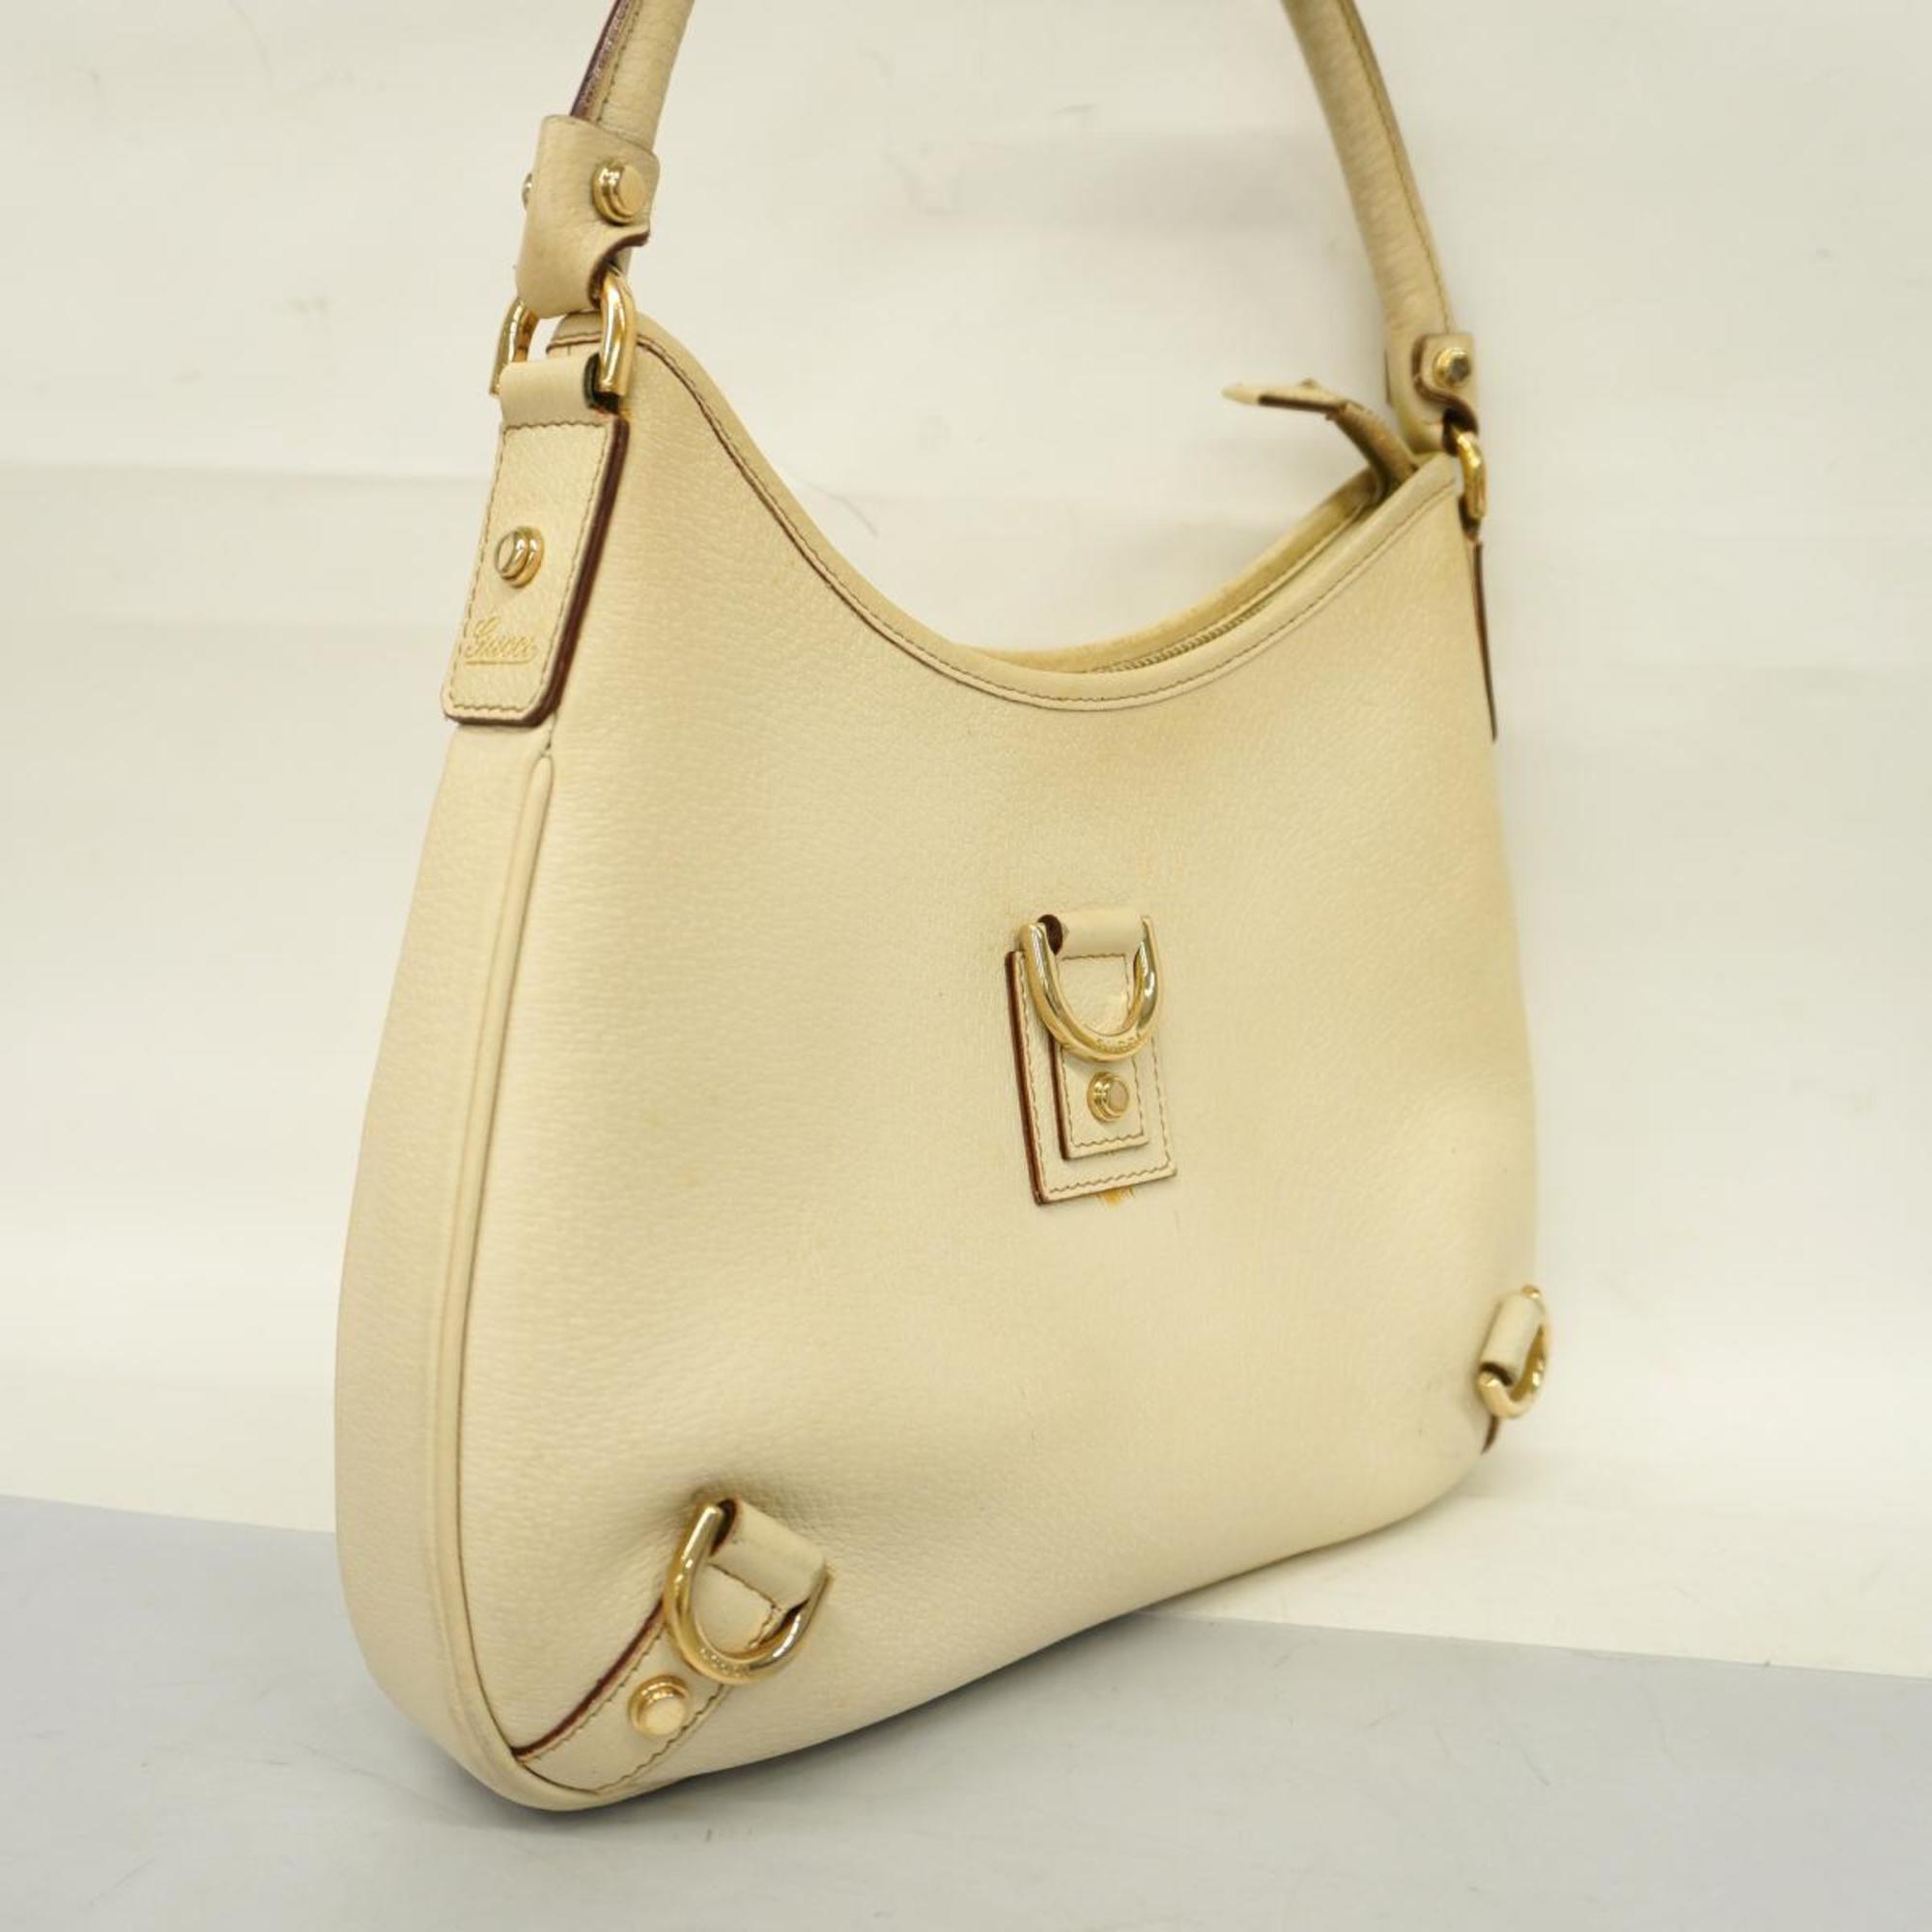 Gucci handbag Abby 130738 leather ivory champagne ladies